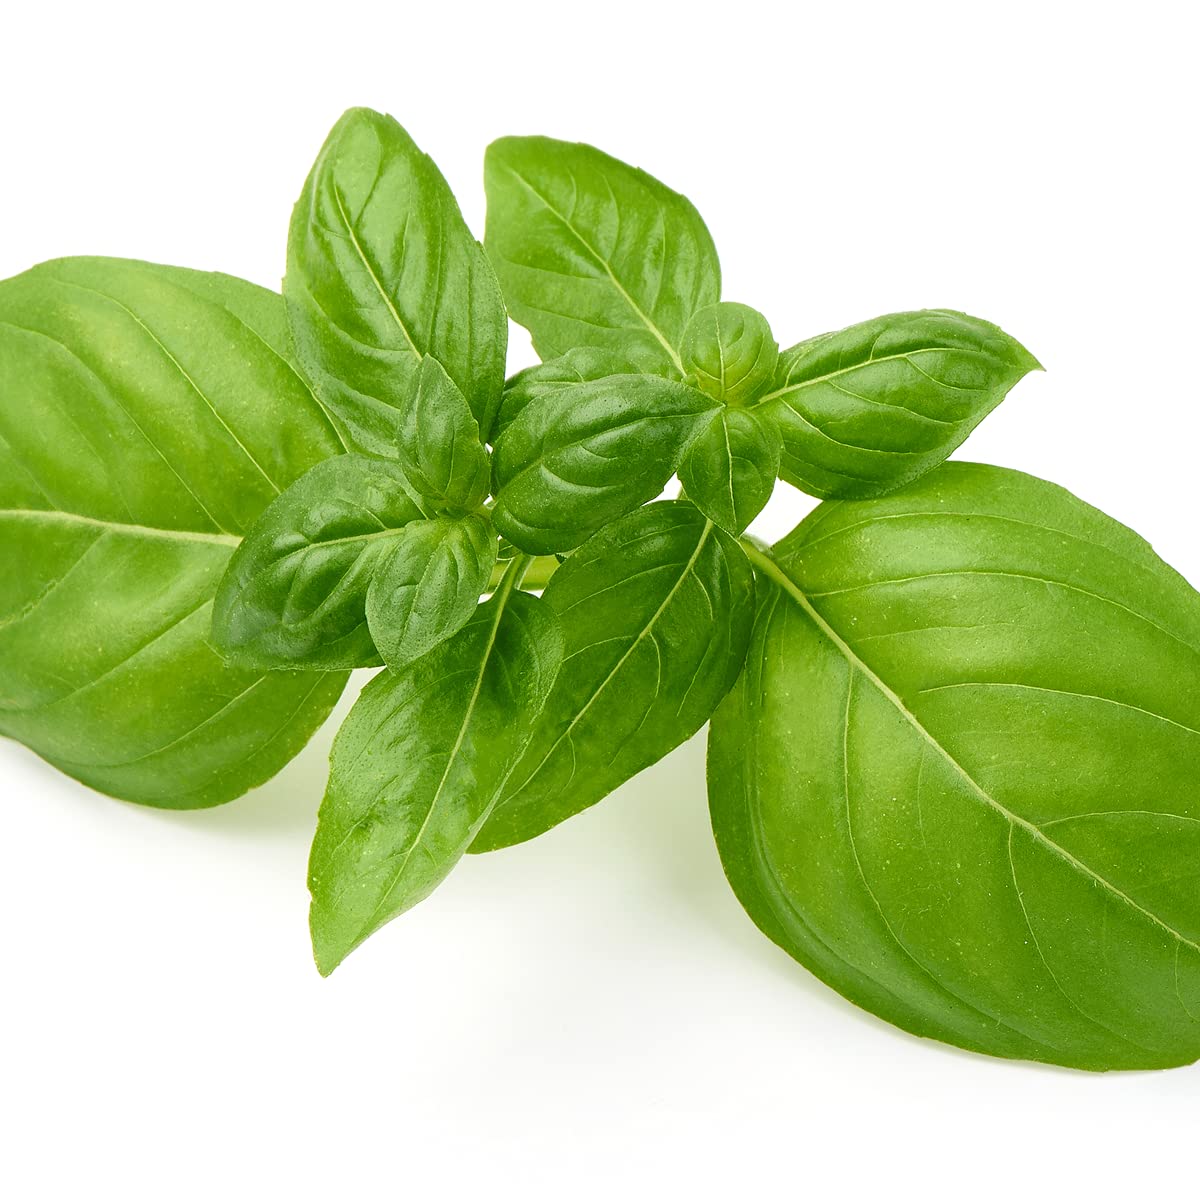 Herb Plants - Basil 'Sweet Genovese' - 3 x Full Plants in 9cm Pots